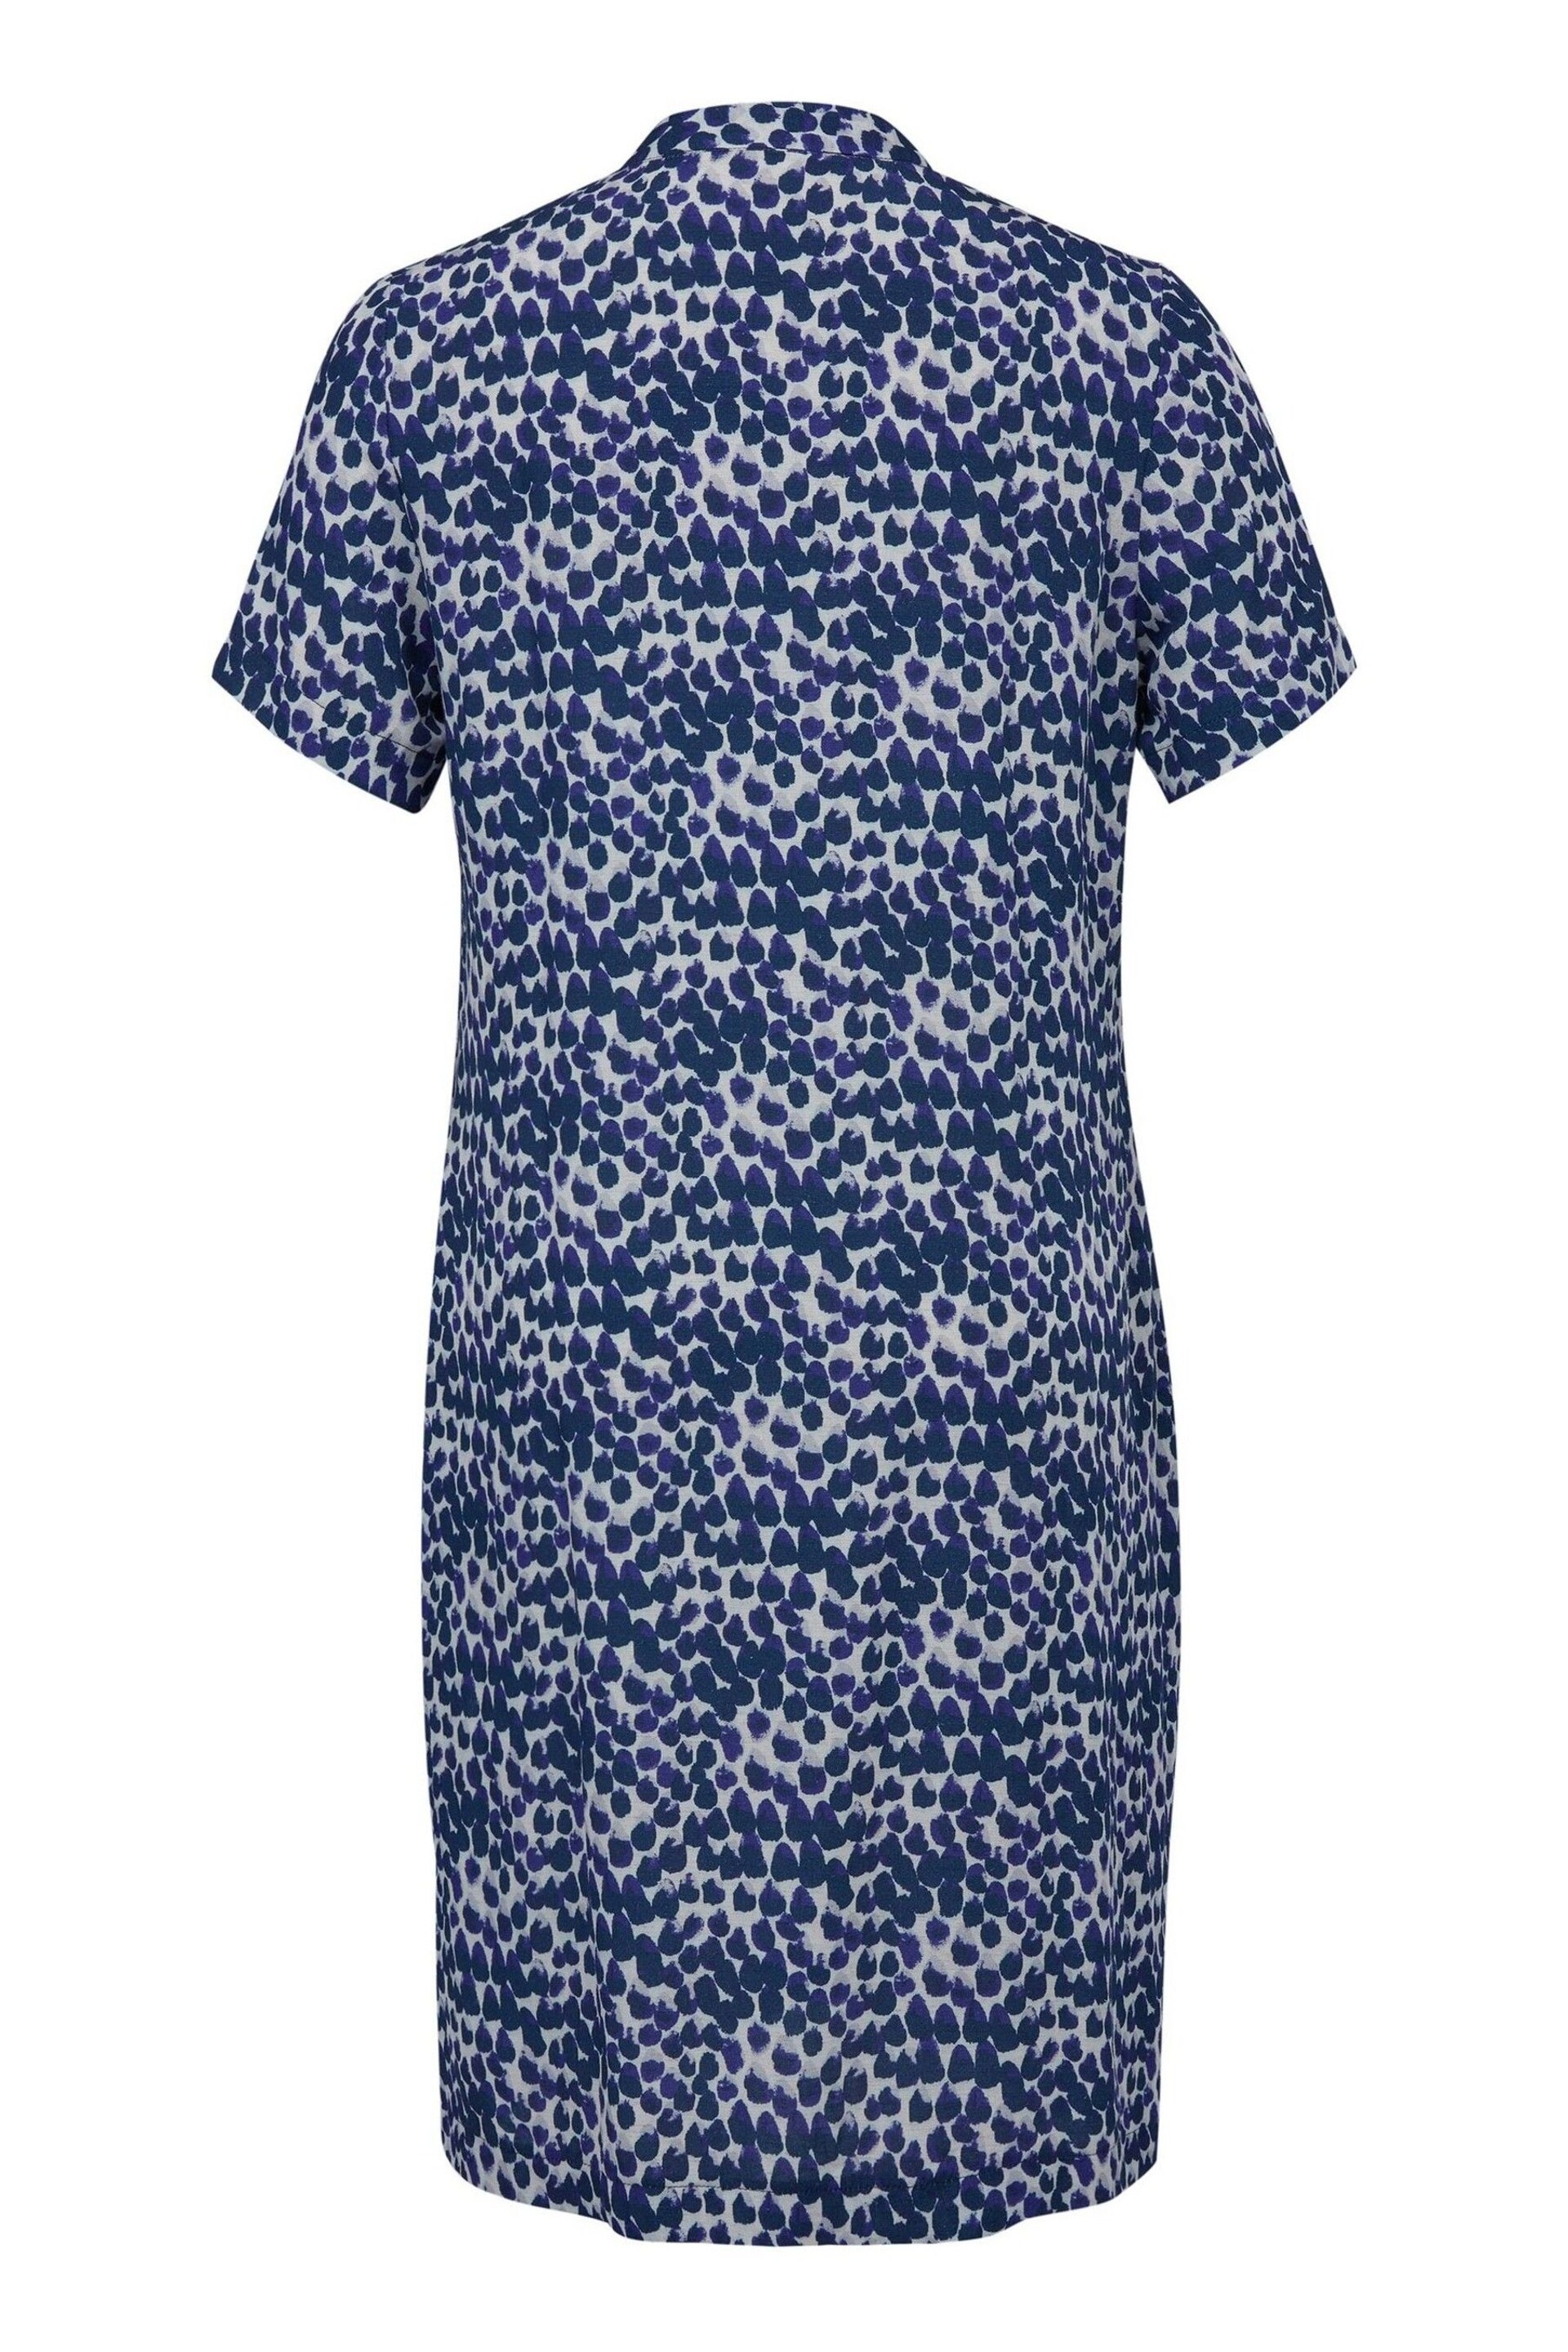 Celtic & Co. Blue Short Sleeve Knee Length Shift Dress - Image 4 of 5